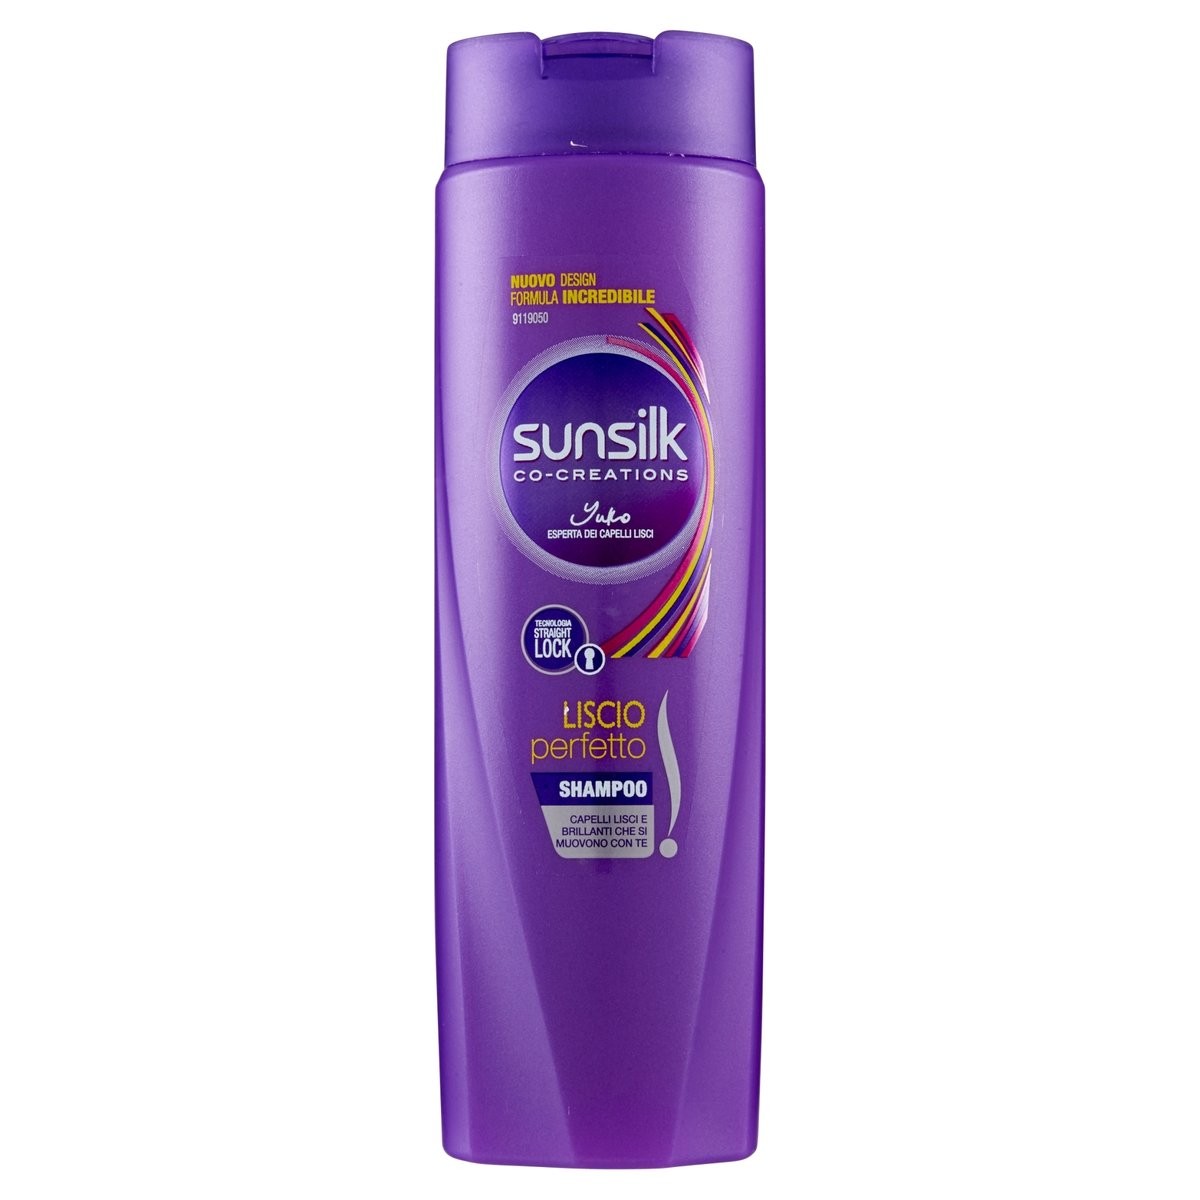 Sunsilk Shampoo Liscio Perfetto